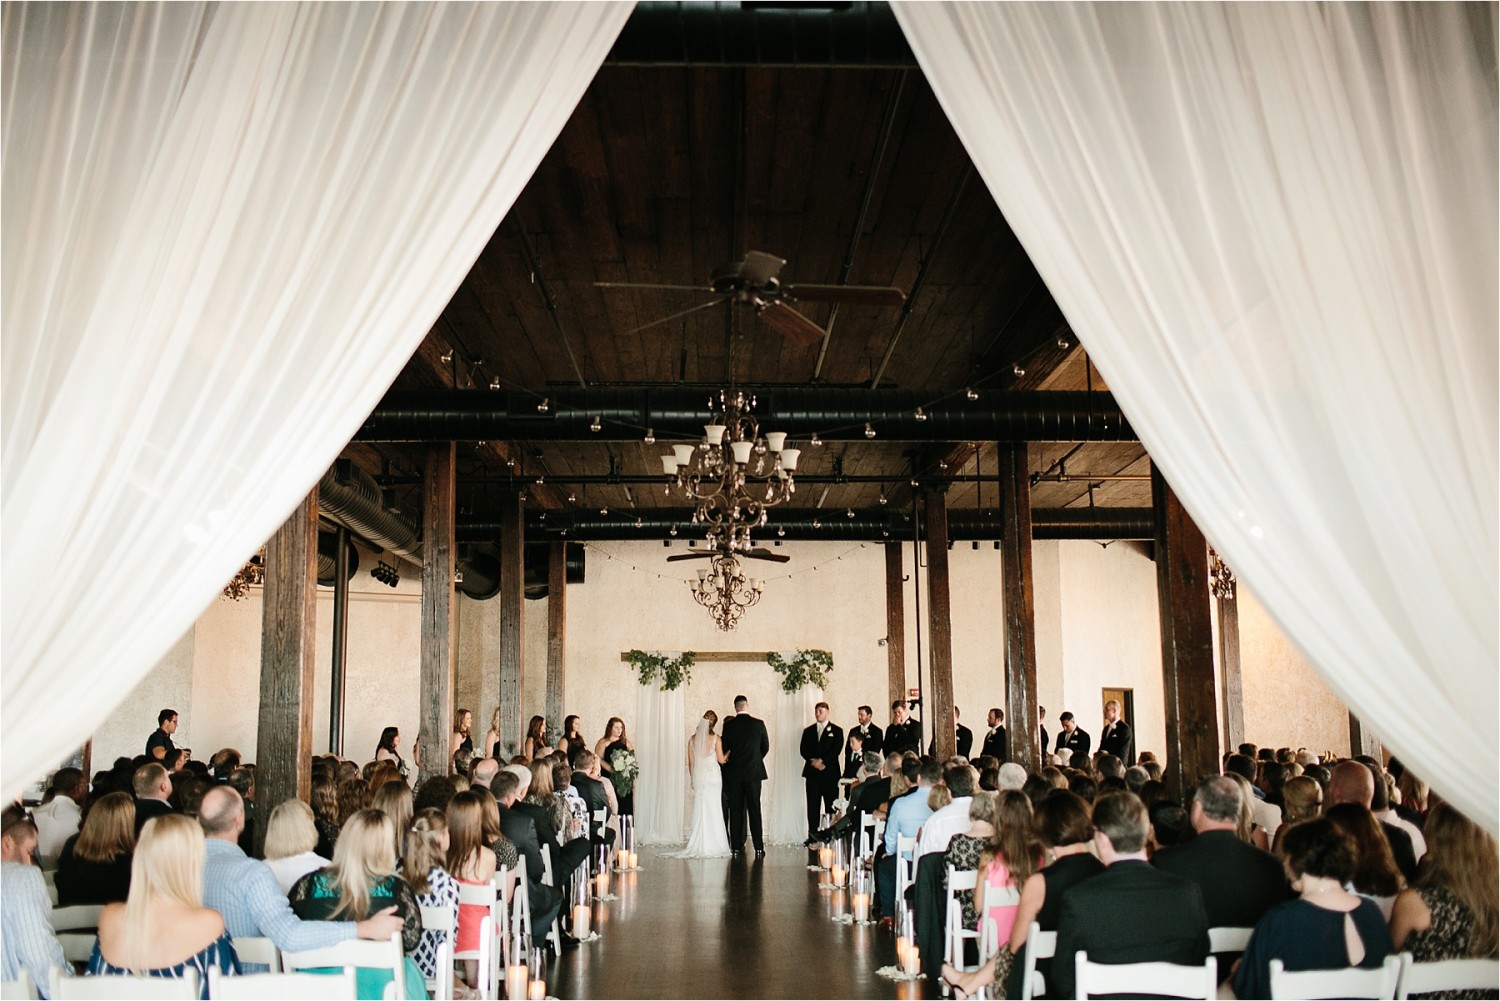 Holly + Jordan || a phoenix ballroom wedding in Waco, TX - Rachel Meagan Photography is a North ...